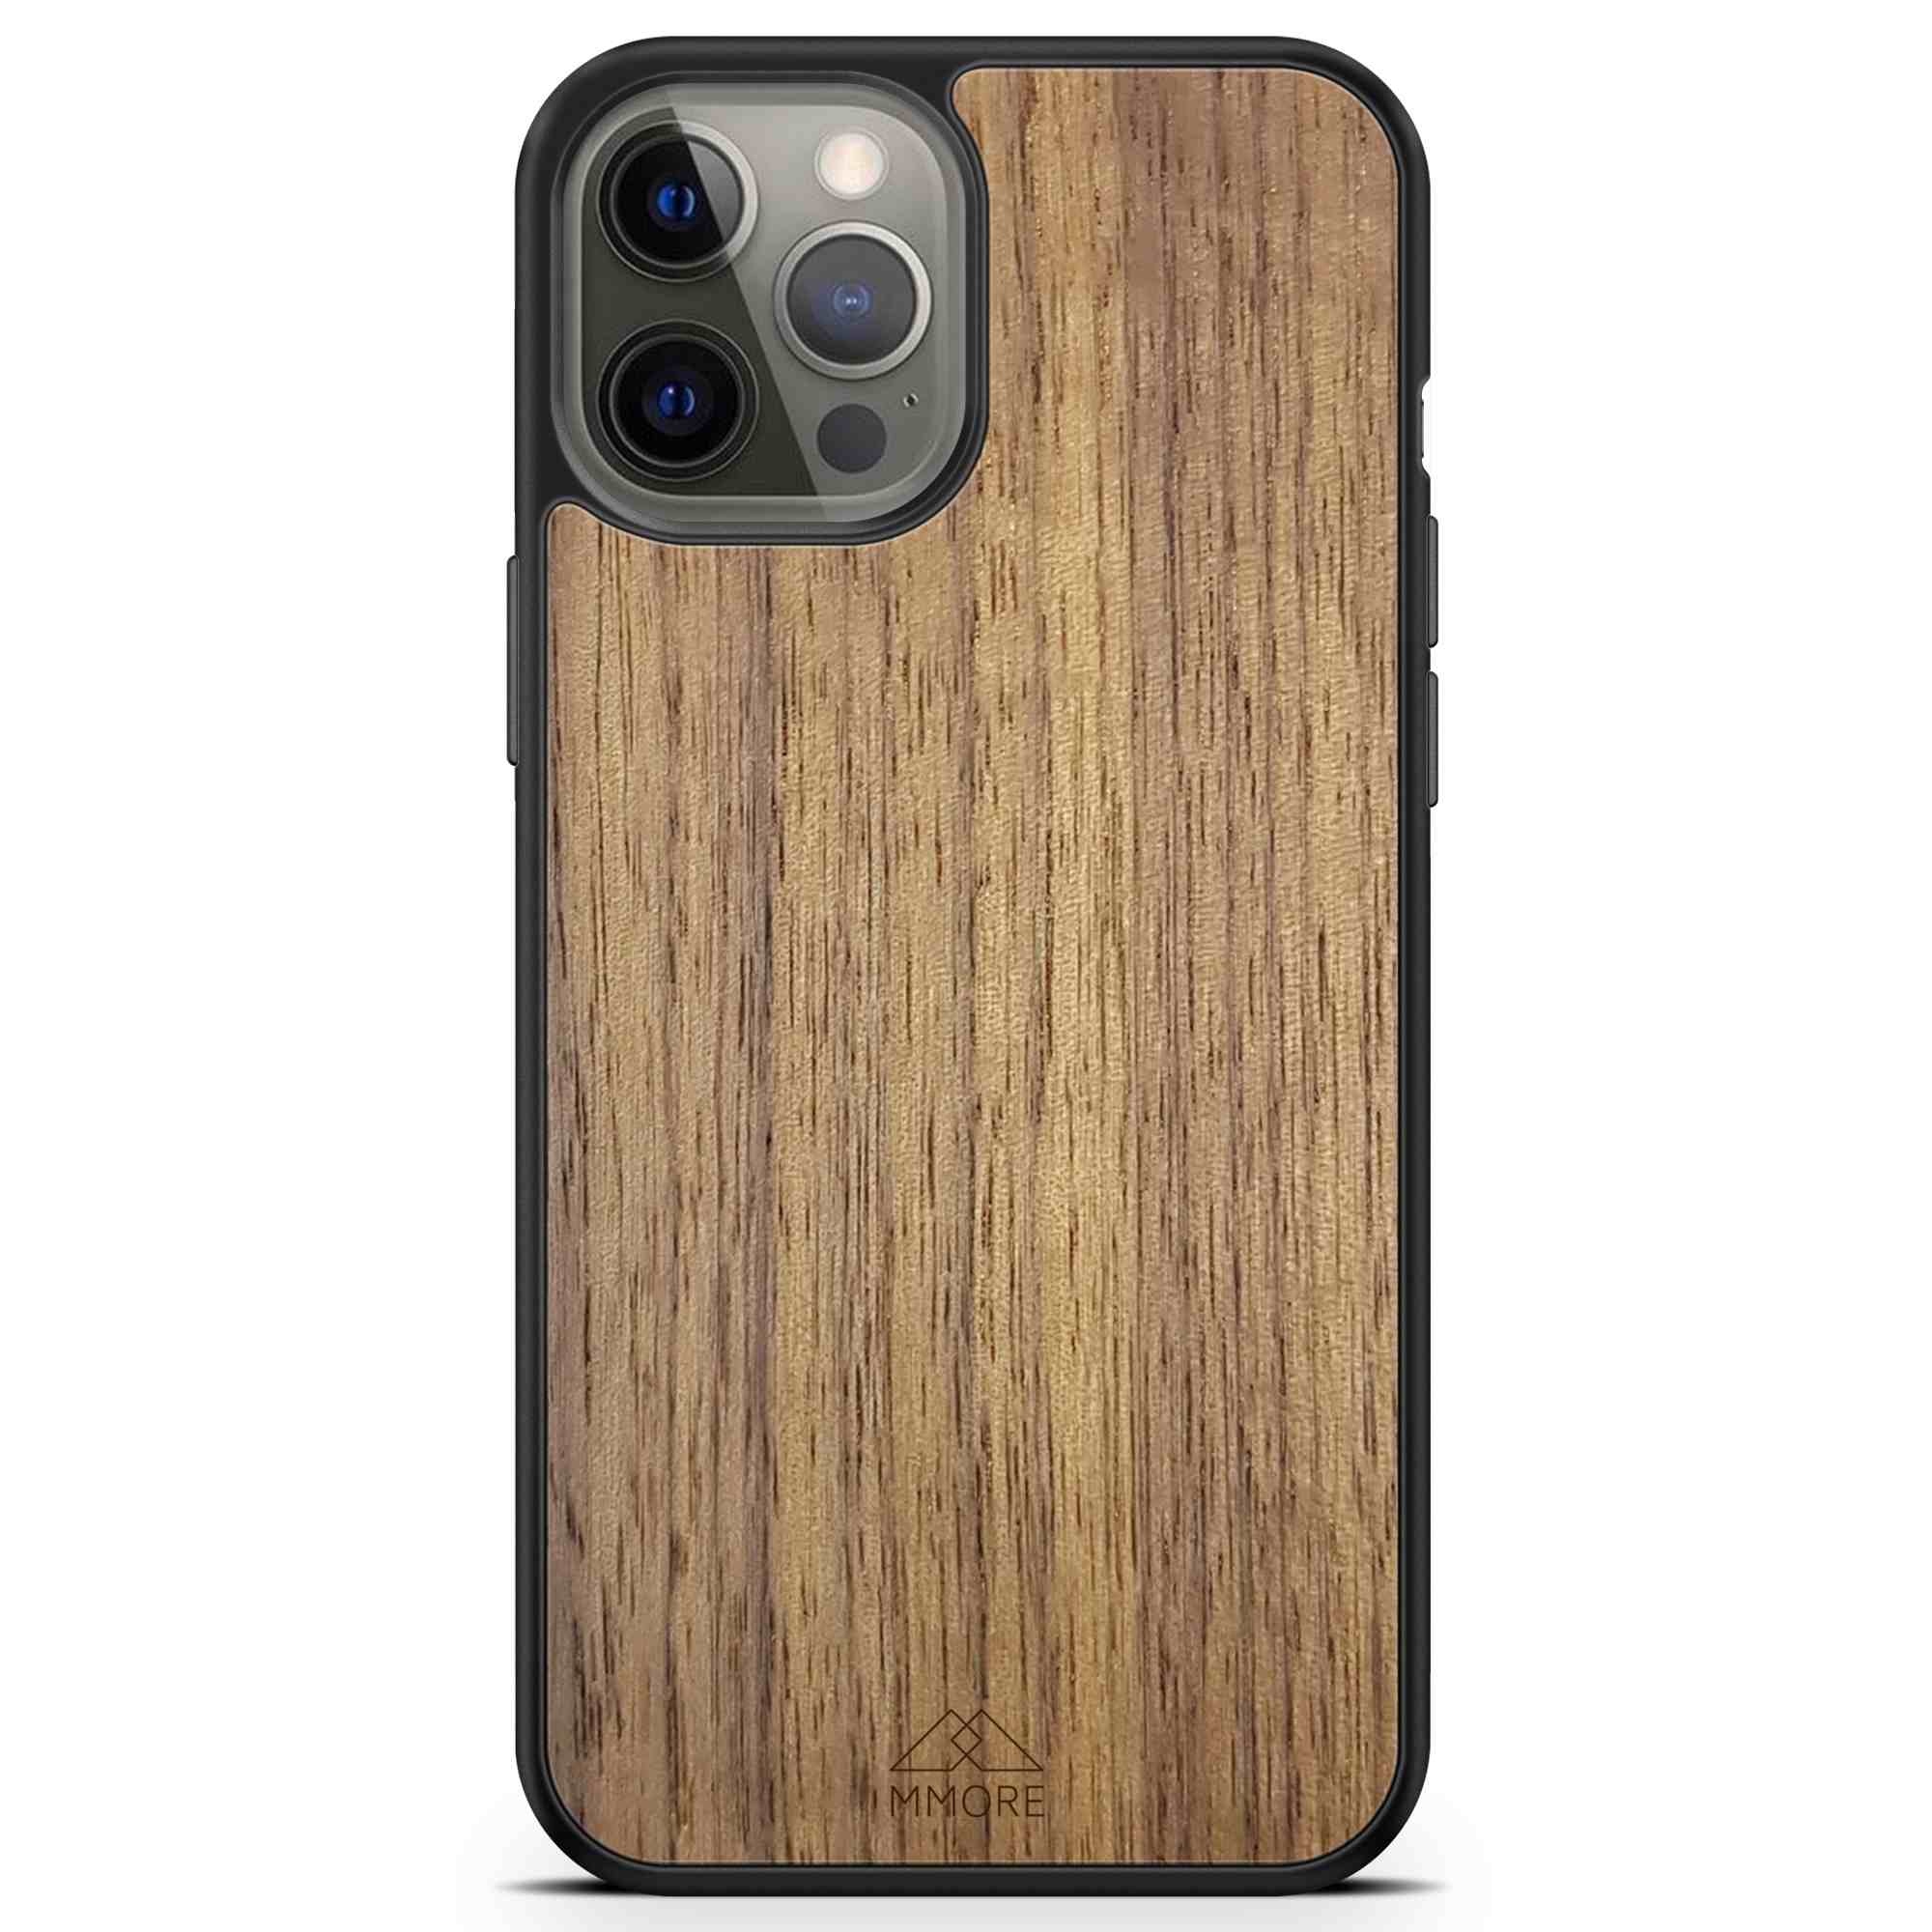 Moment iPhone Xs Photo Case, Walnut Wood